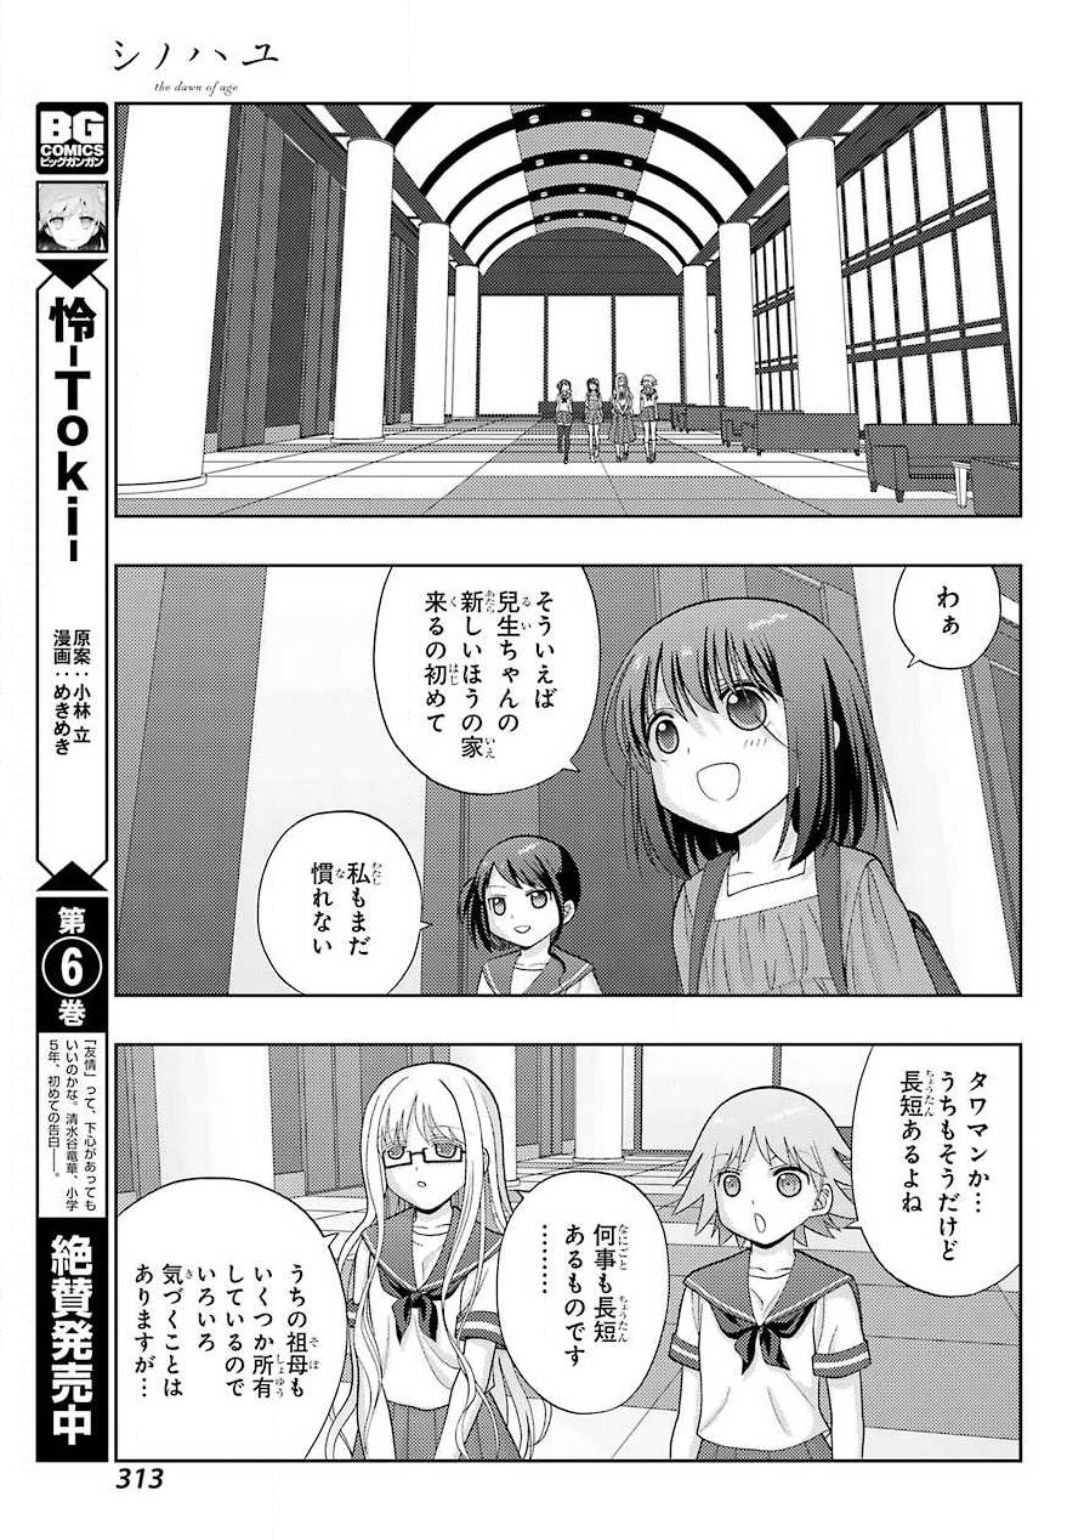 Shinohayu - The Dawn of Age Manga - Chapter 079 - Page 3